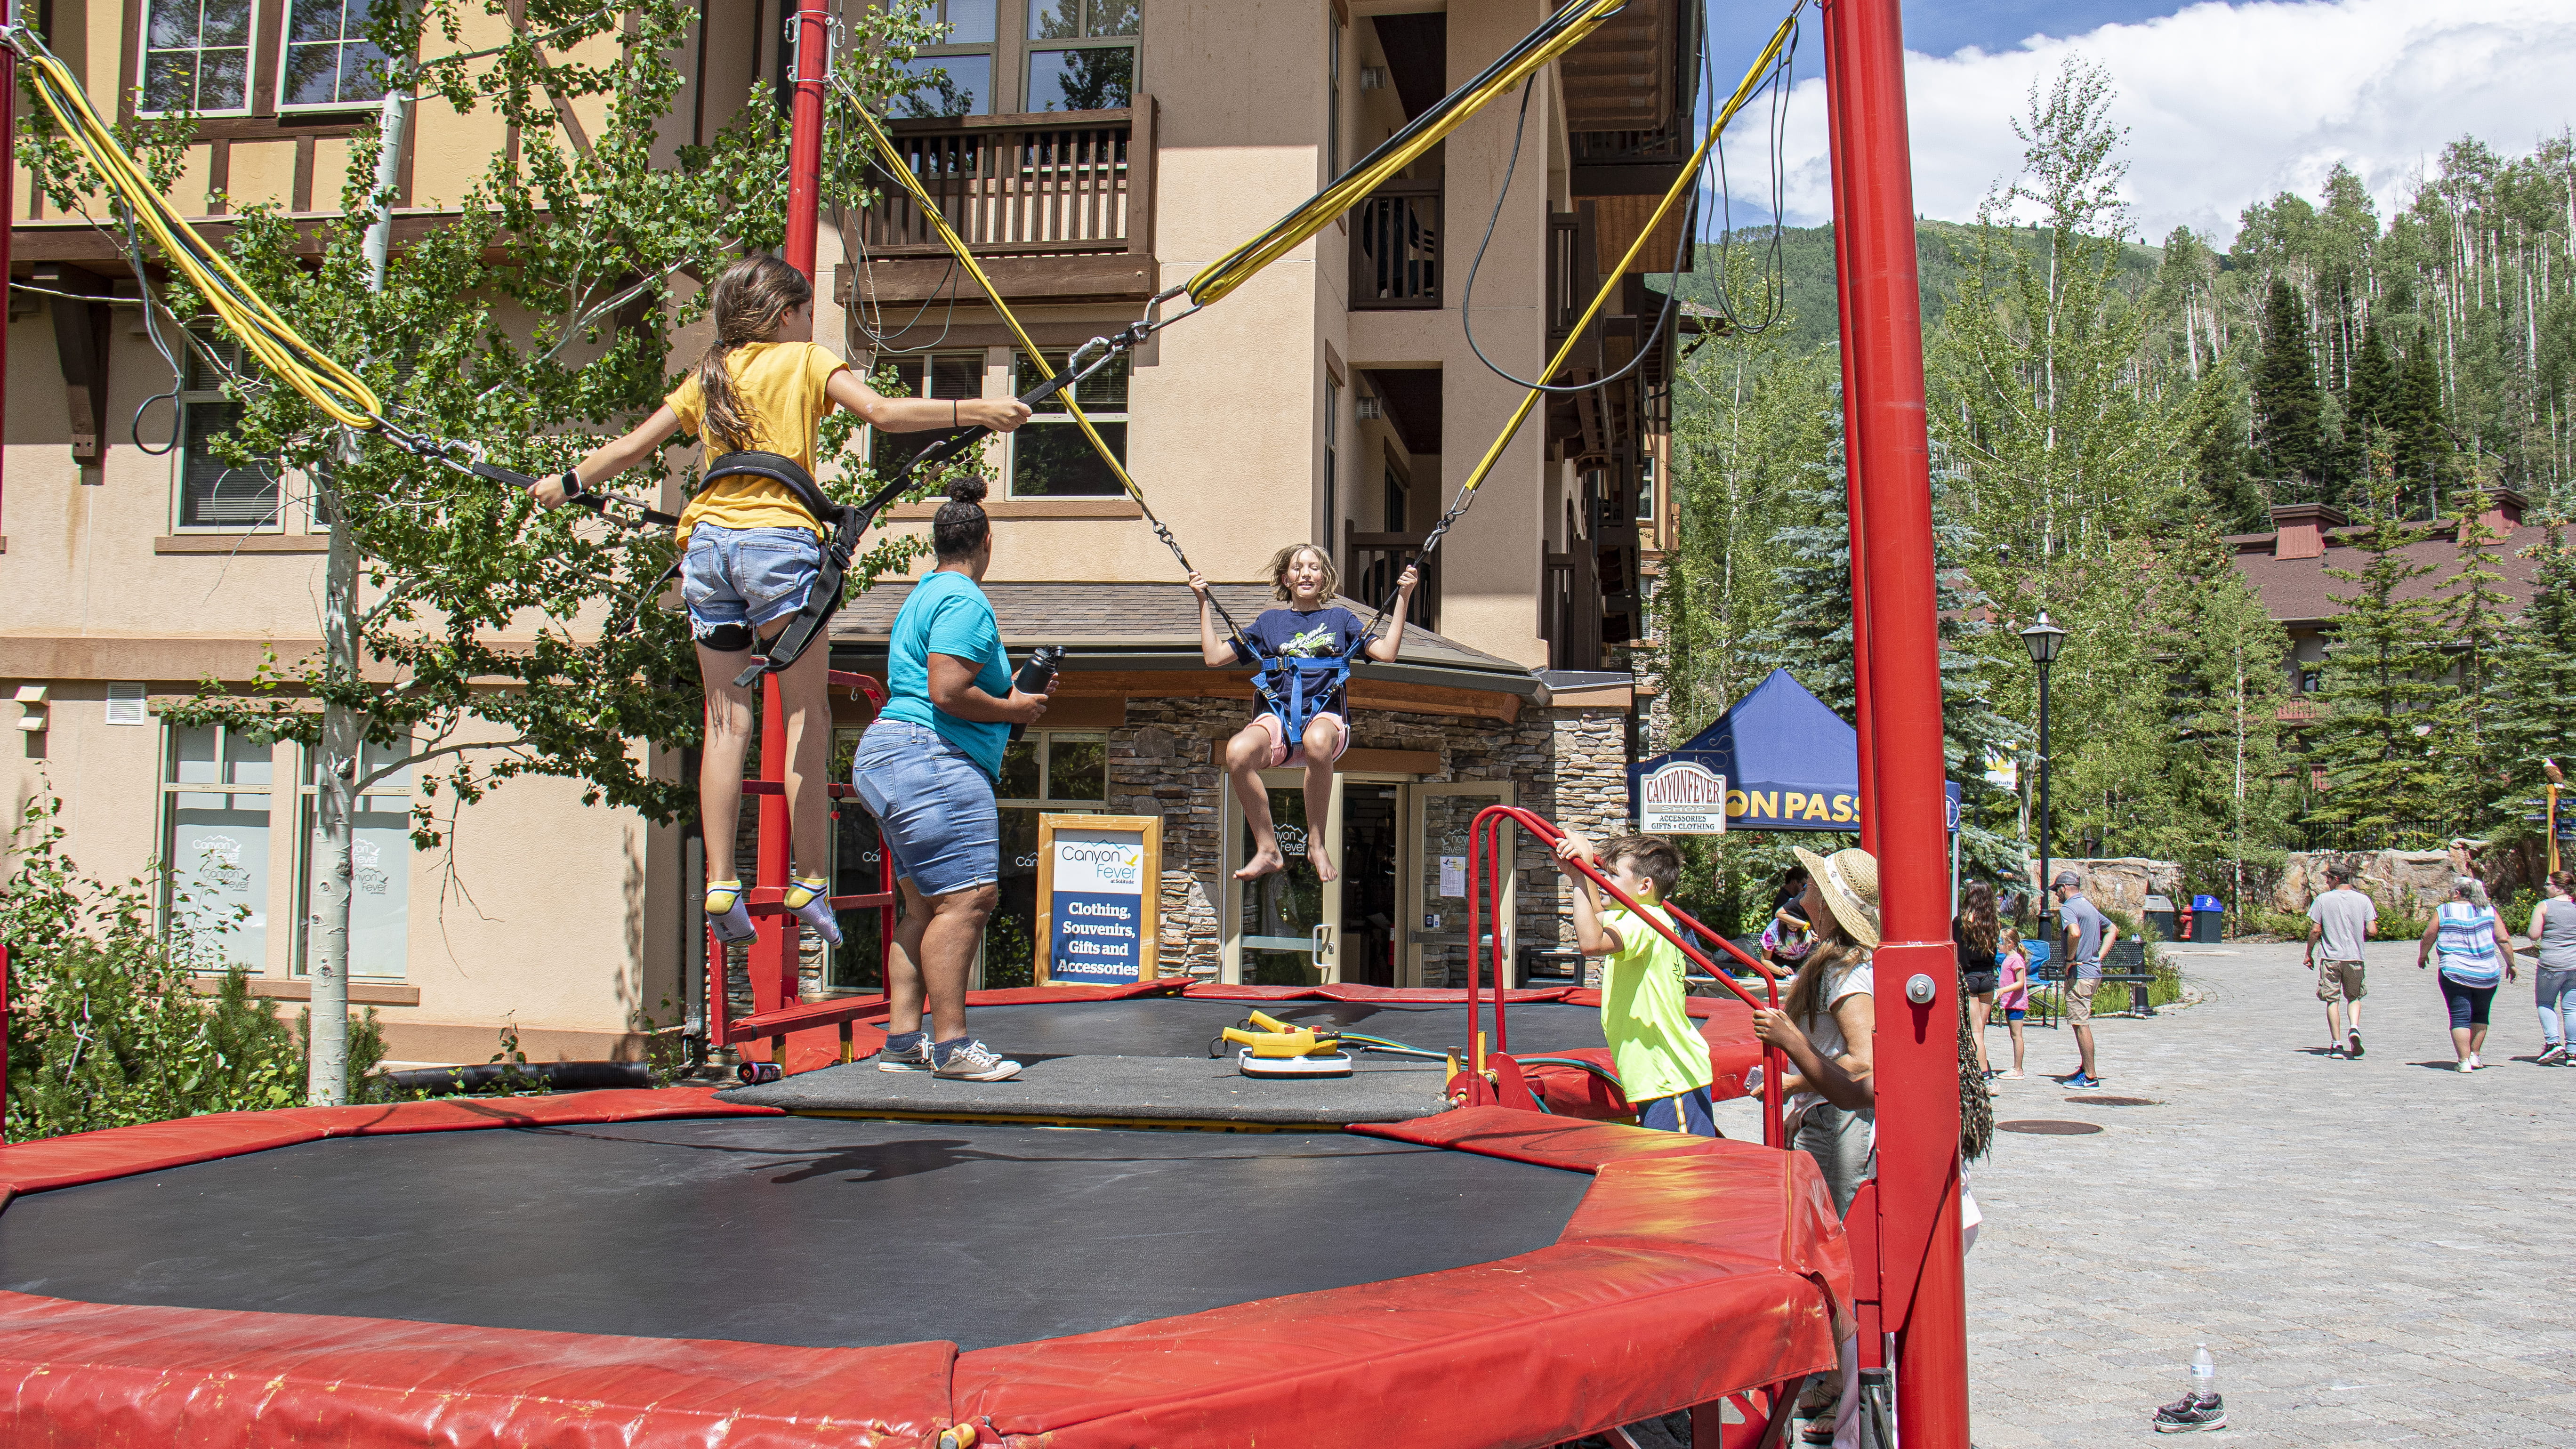 Kids jump on trampoline at summerfest 